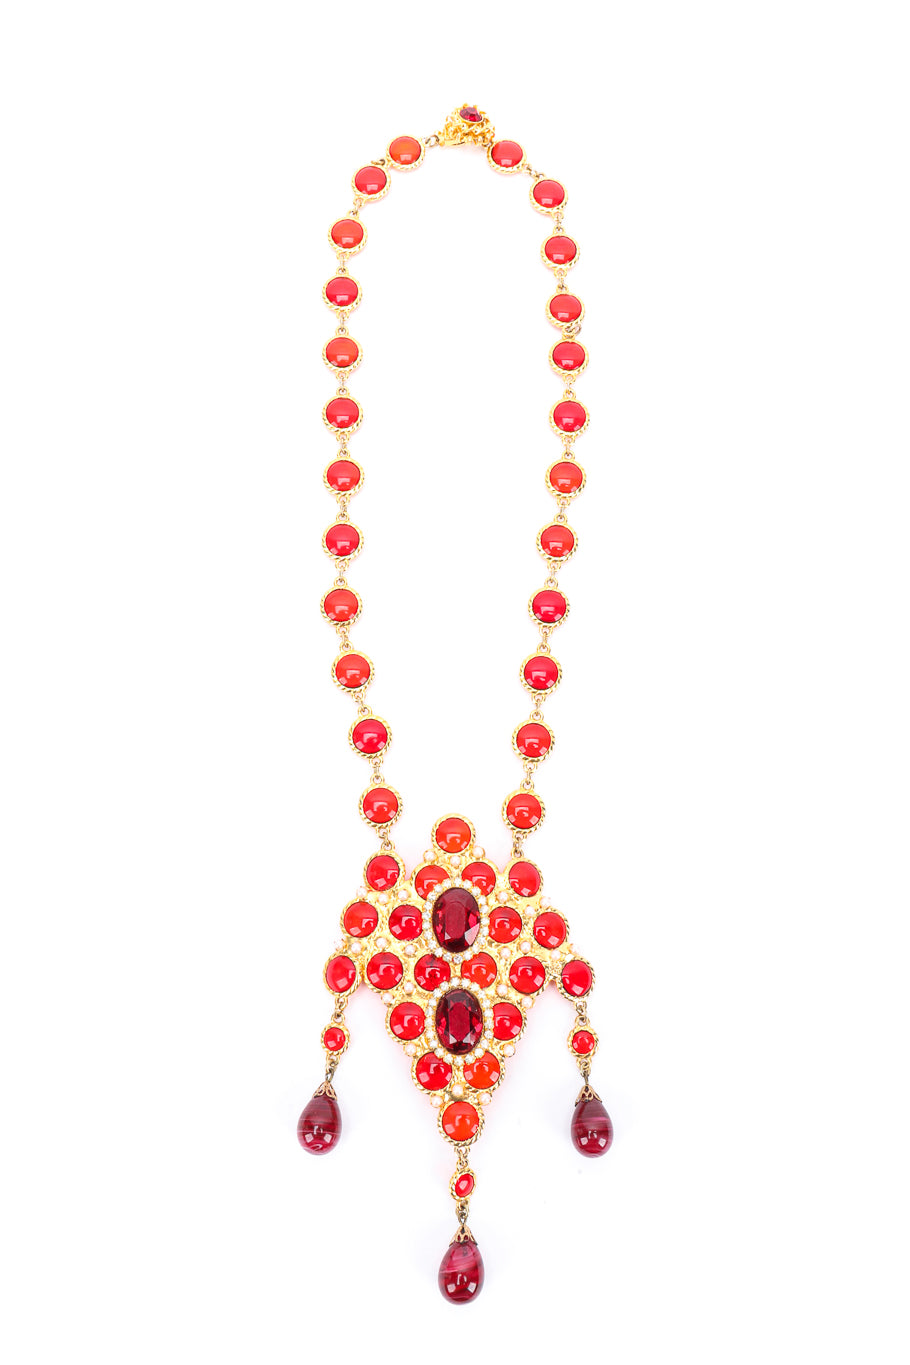 Vintage DeLillo Ruby Drop Pendant Necklace front view on white backdrop @Recessla